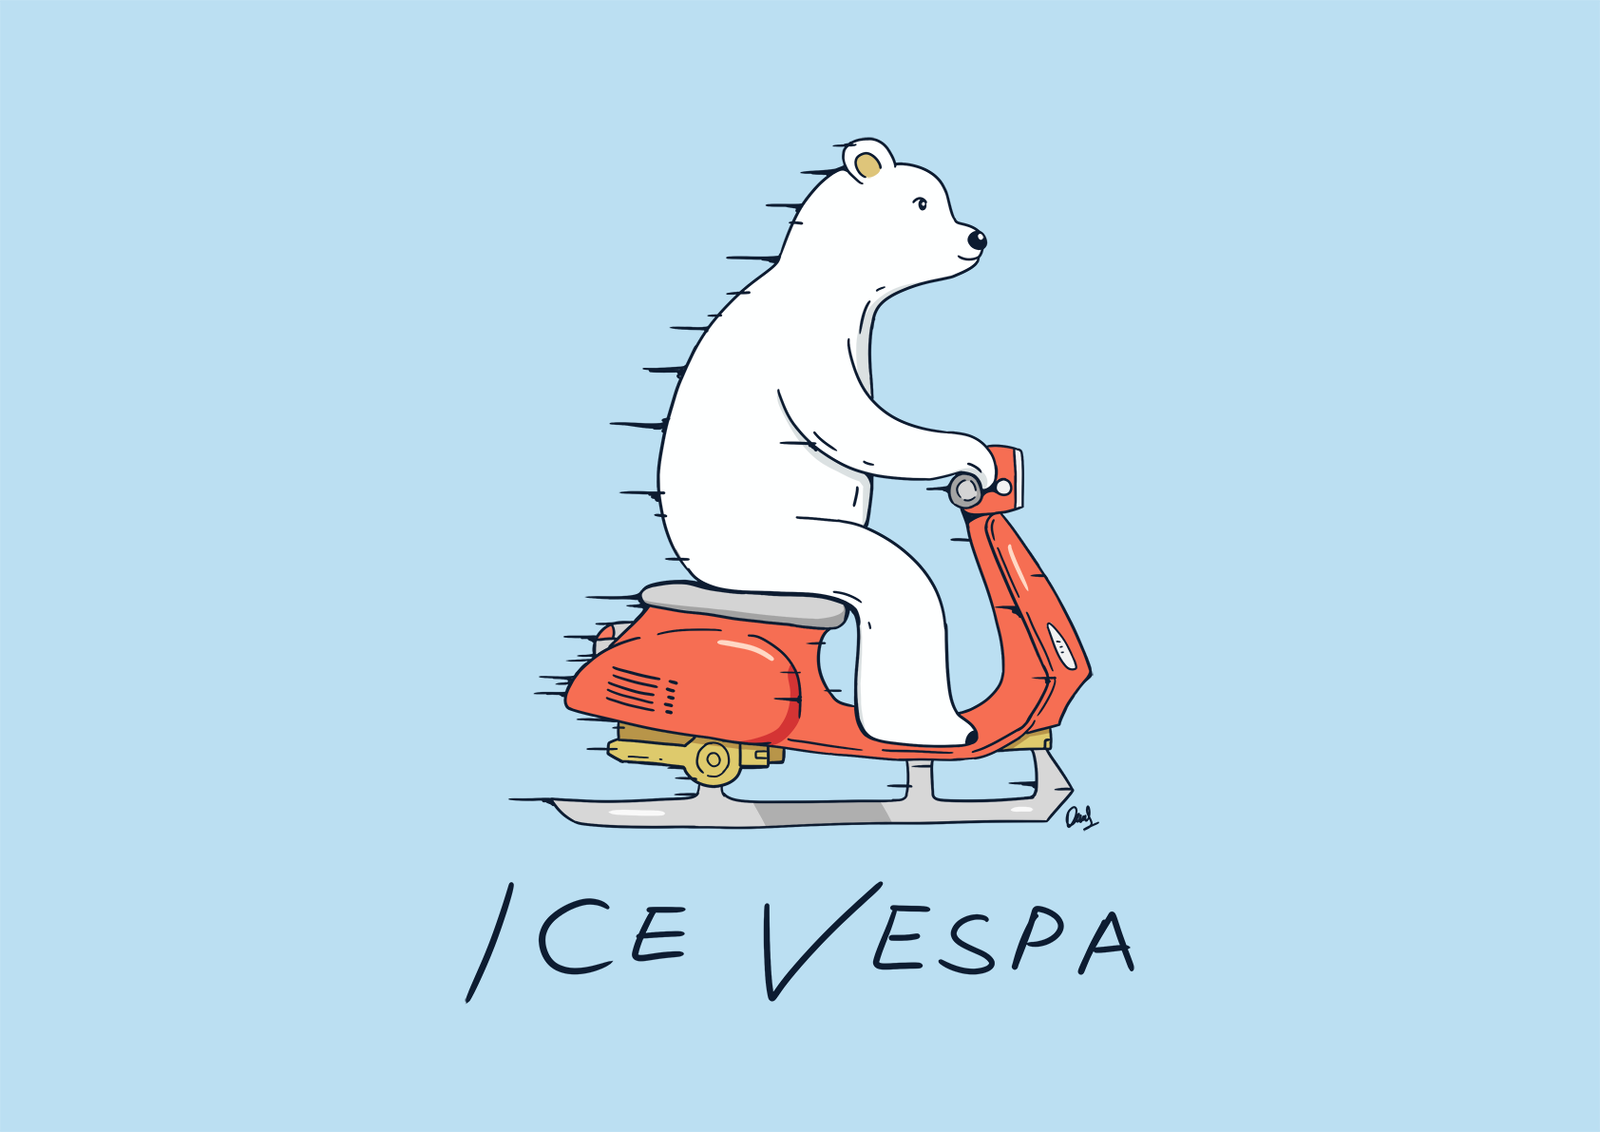 Polar bear and the ice vespa by Danis Ariandi on Dribbble